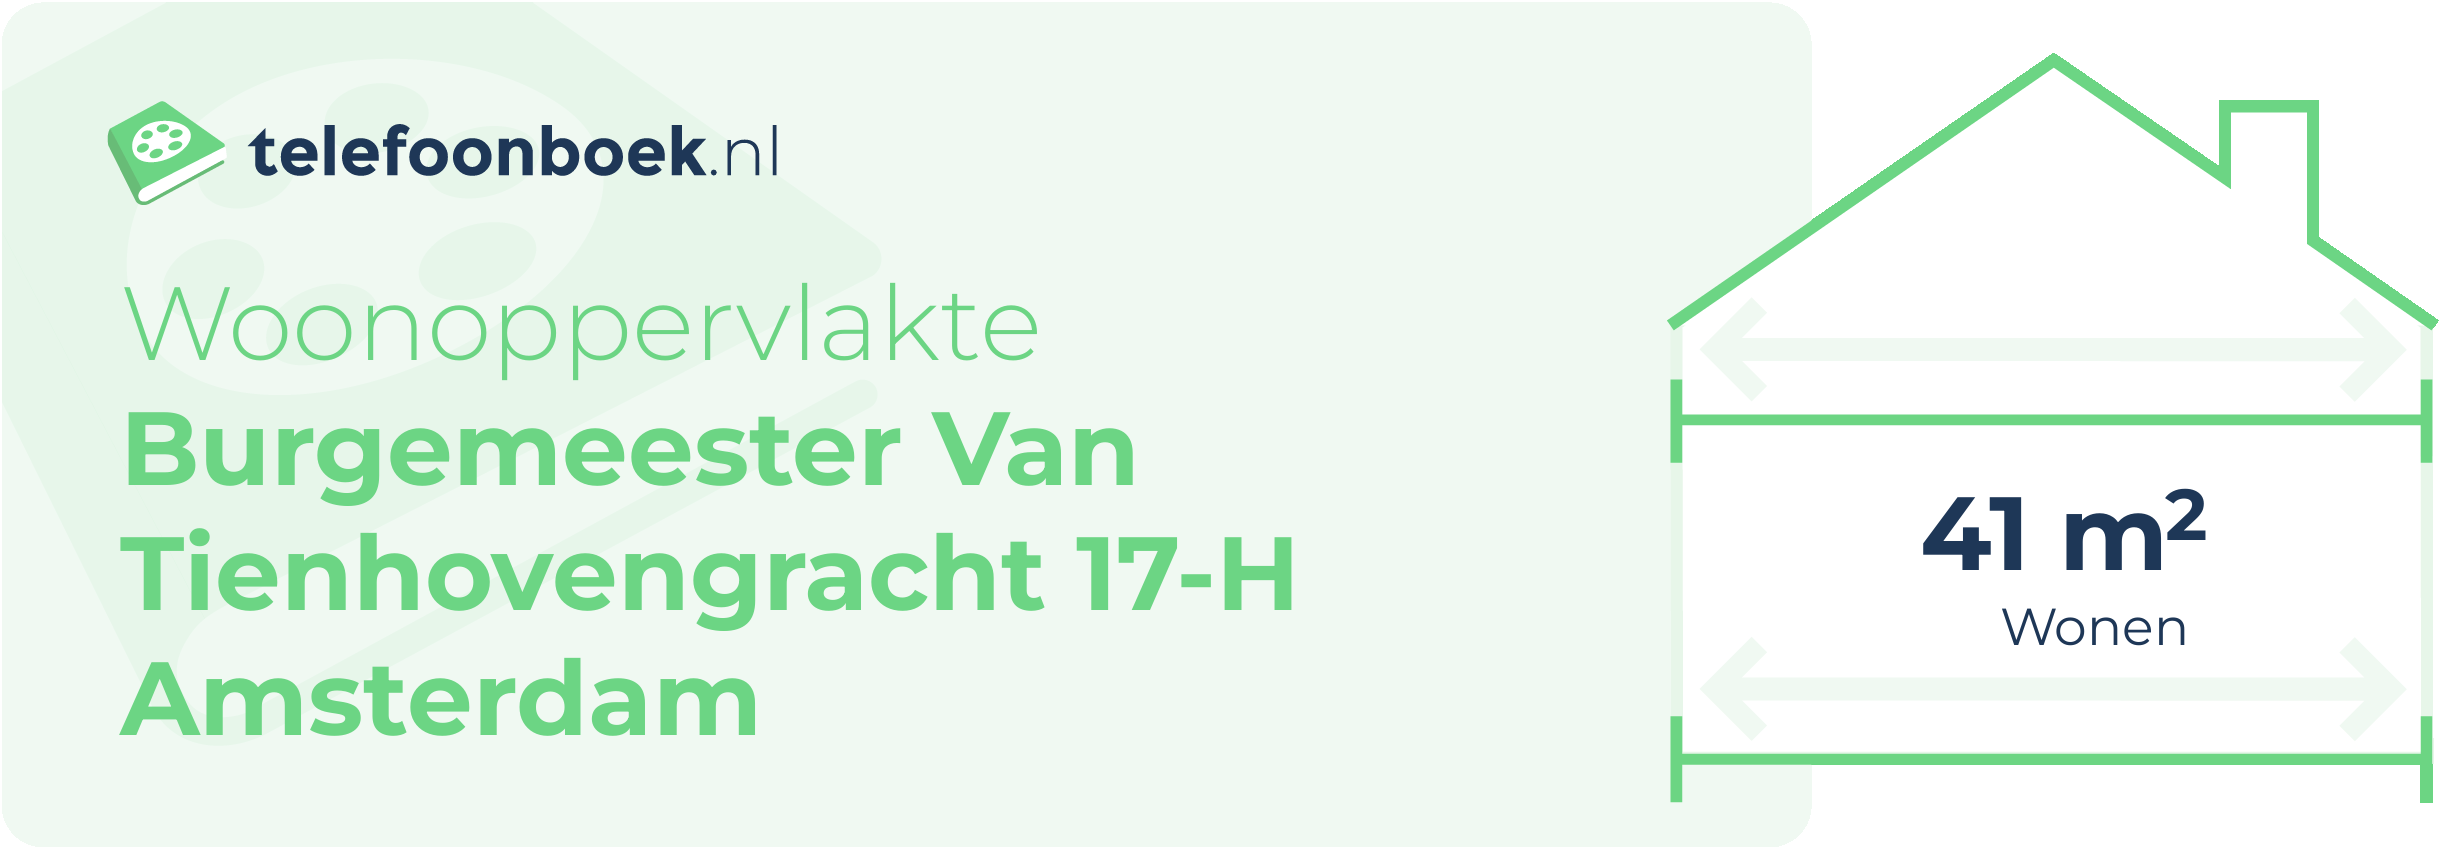 Woonoppervlakte Burgemeester Van Tienhovengracht 17-H Amsterdam